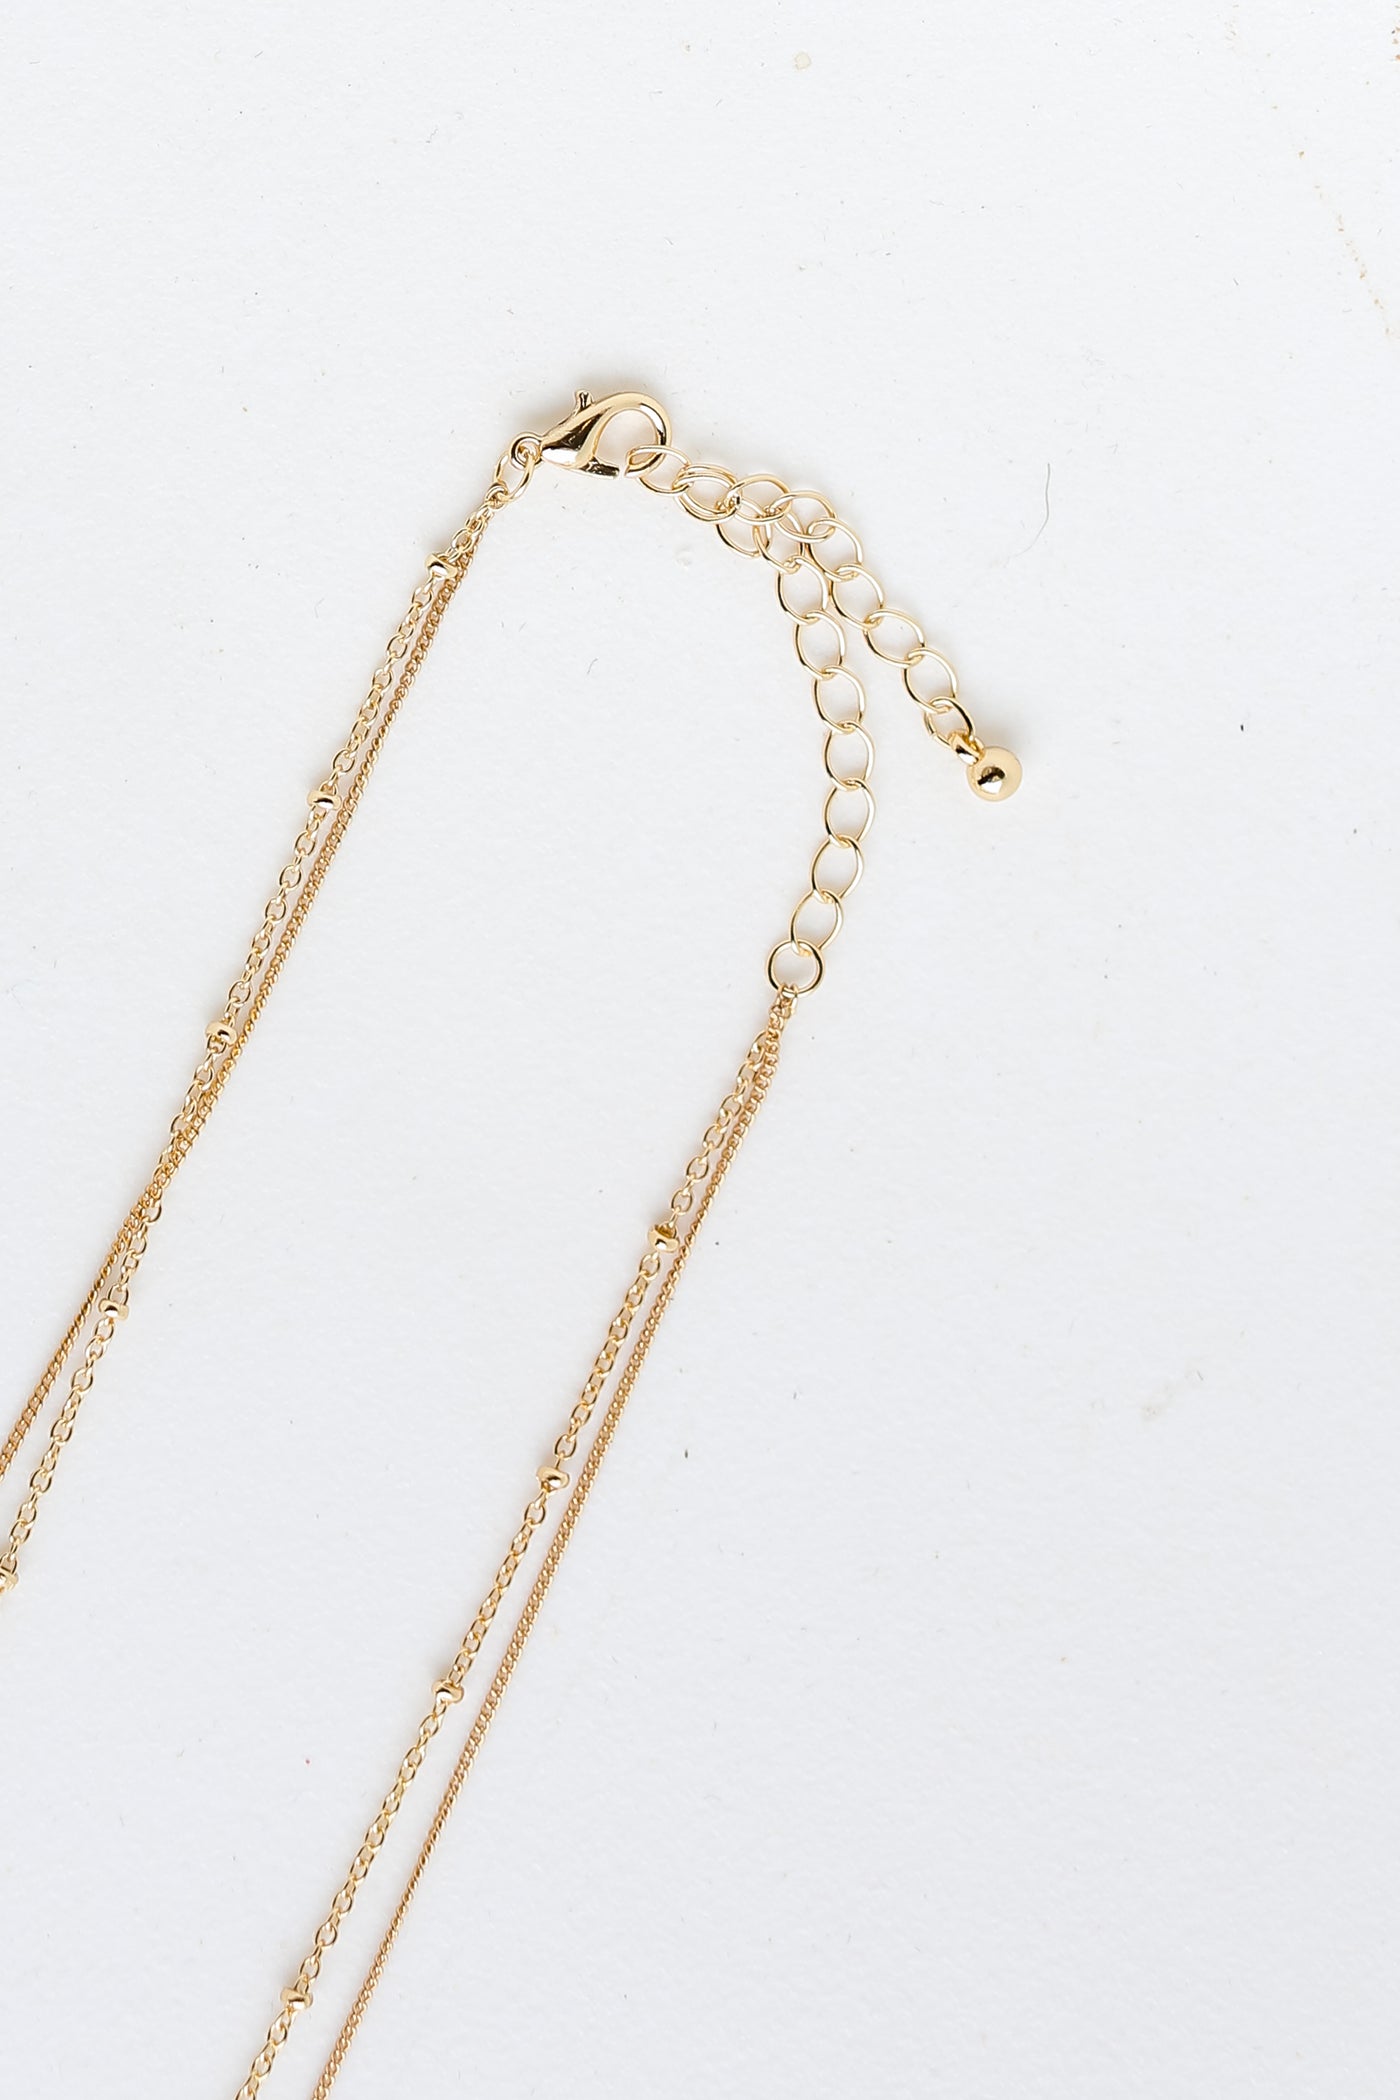 Gold Rhinestone Layered Chain Necklace close up